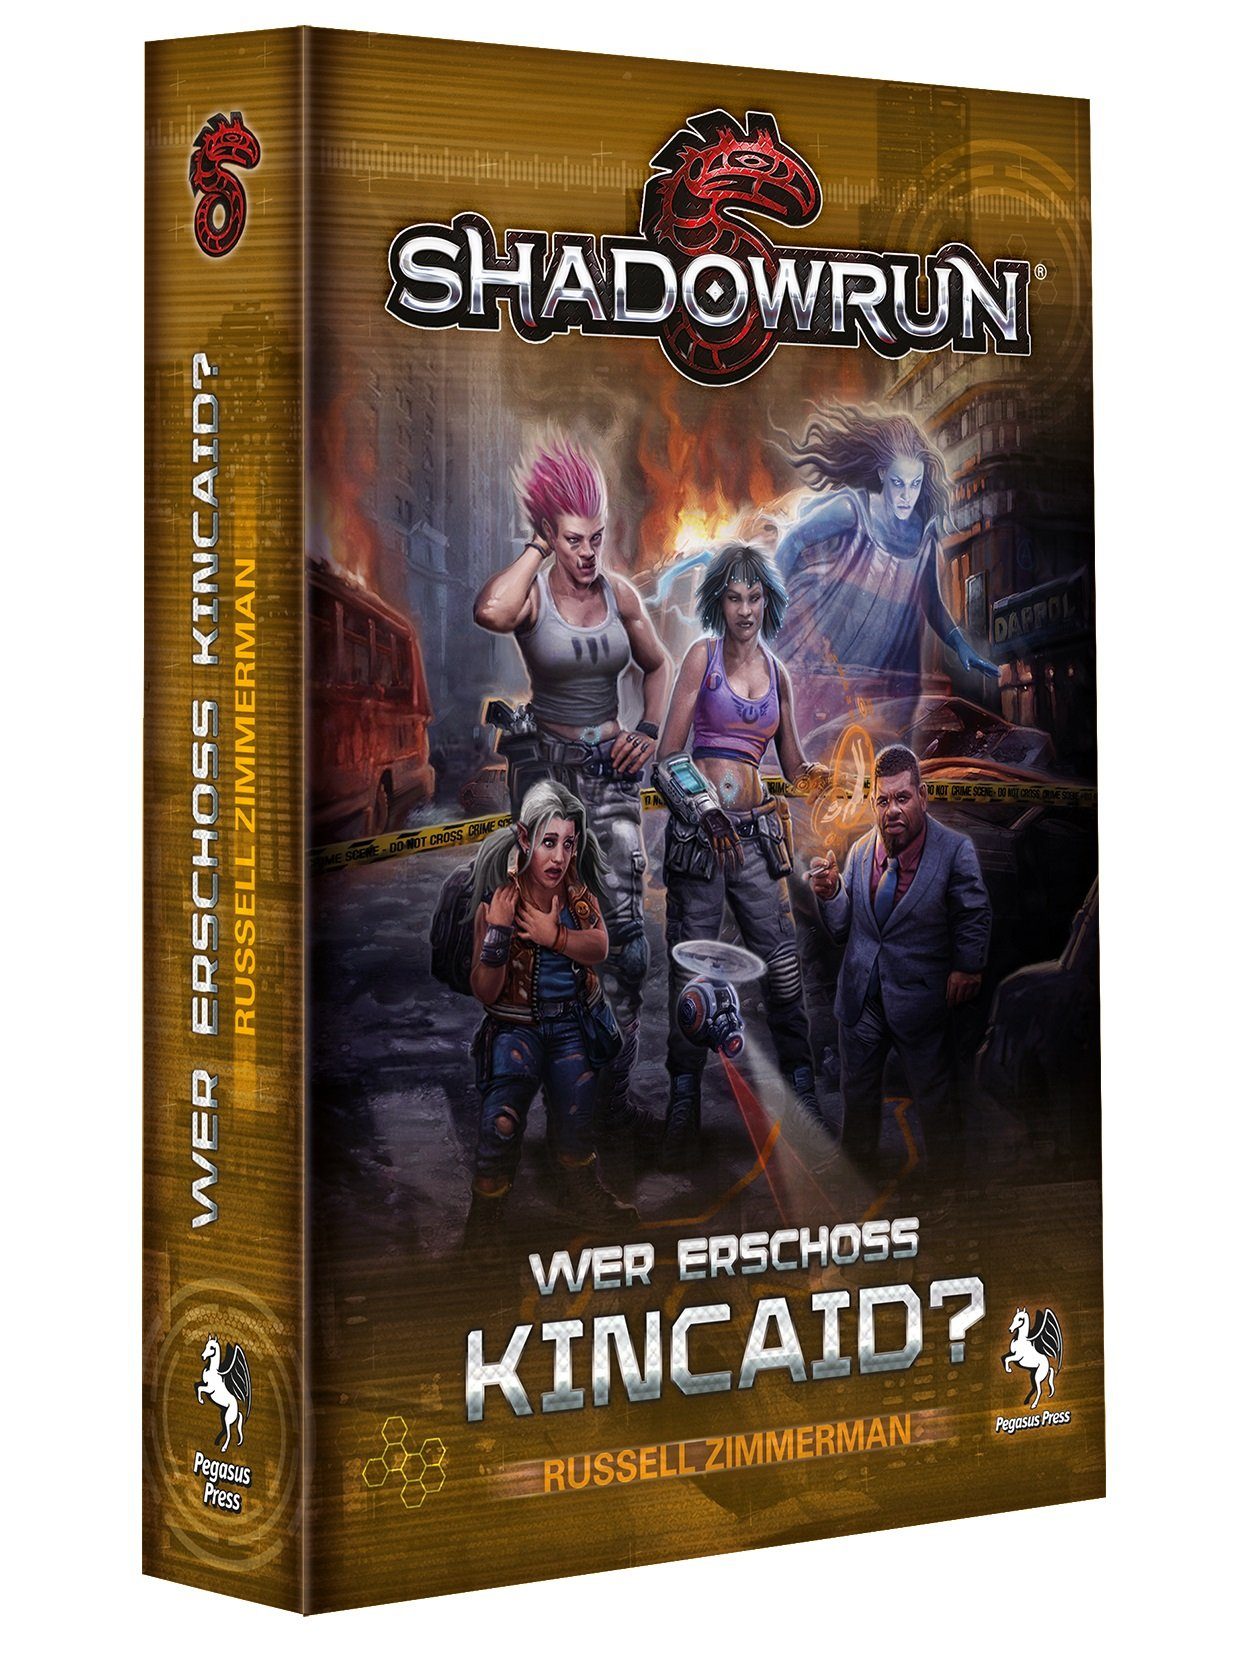 Pegasus Spiele Verbandbuch Shadowrun: Wer erschoss Kincaid? (Roman)